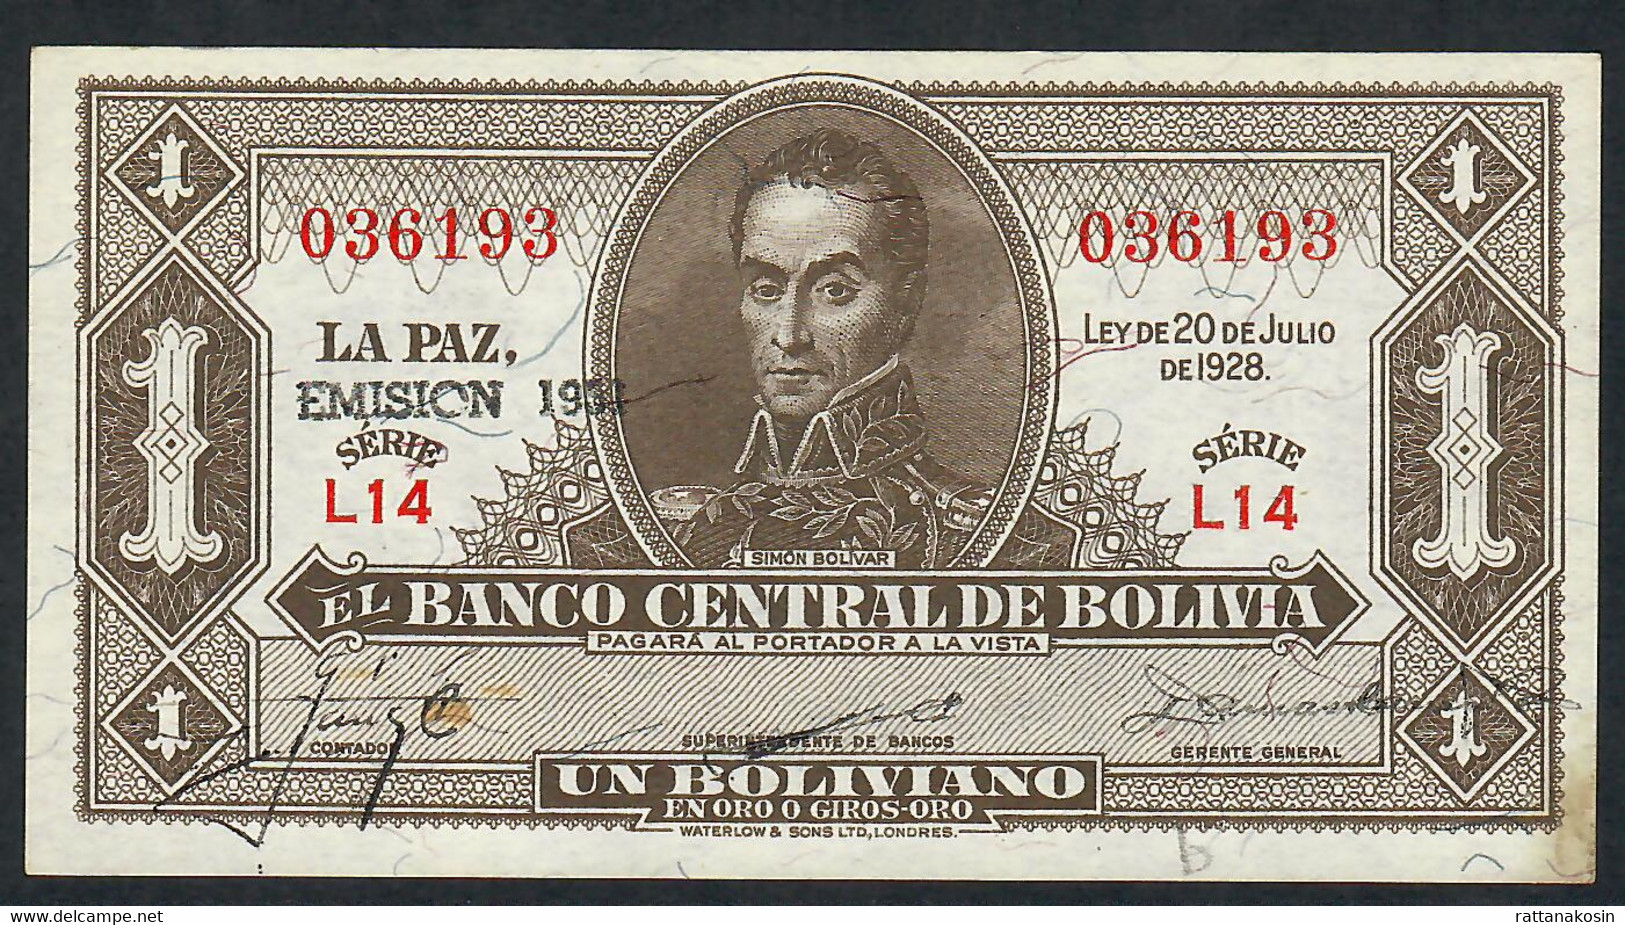 BOLIVIA P128k 1 BOLIVIANO 20.7.1928 EMISION 1951  #L4 Signature 23    AU - Bolivie